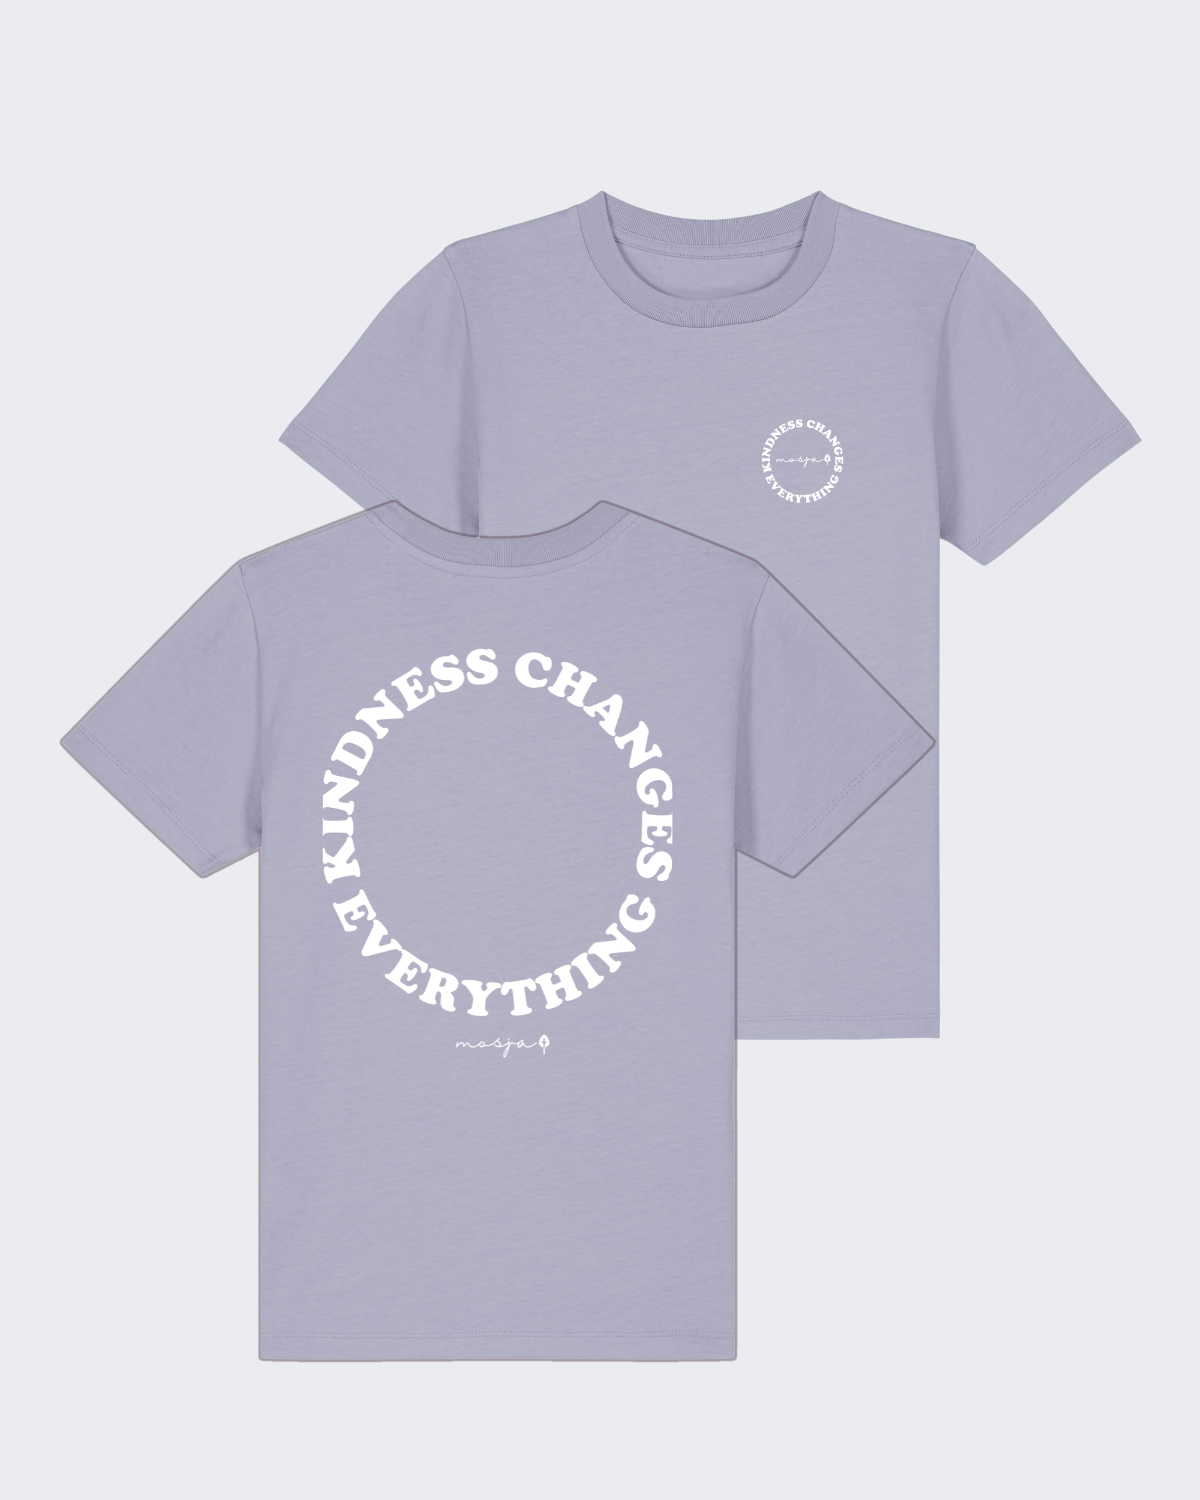 Kids-Shirt "Lavendel"